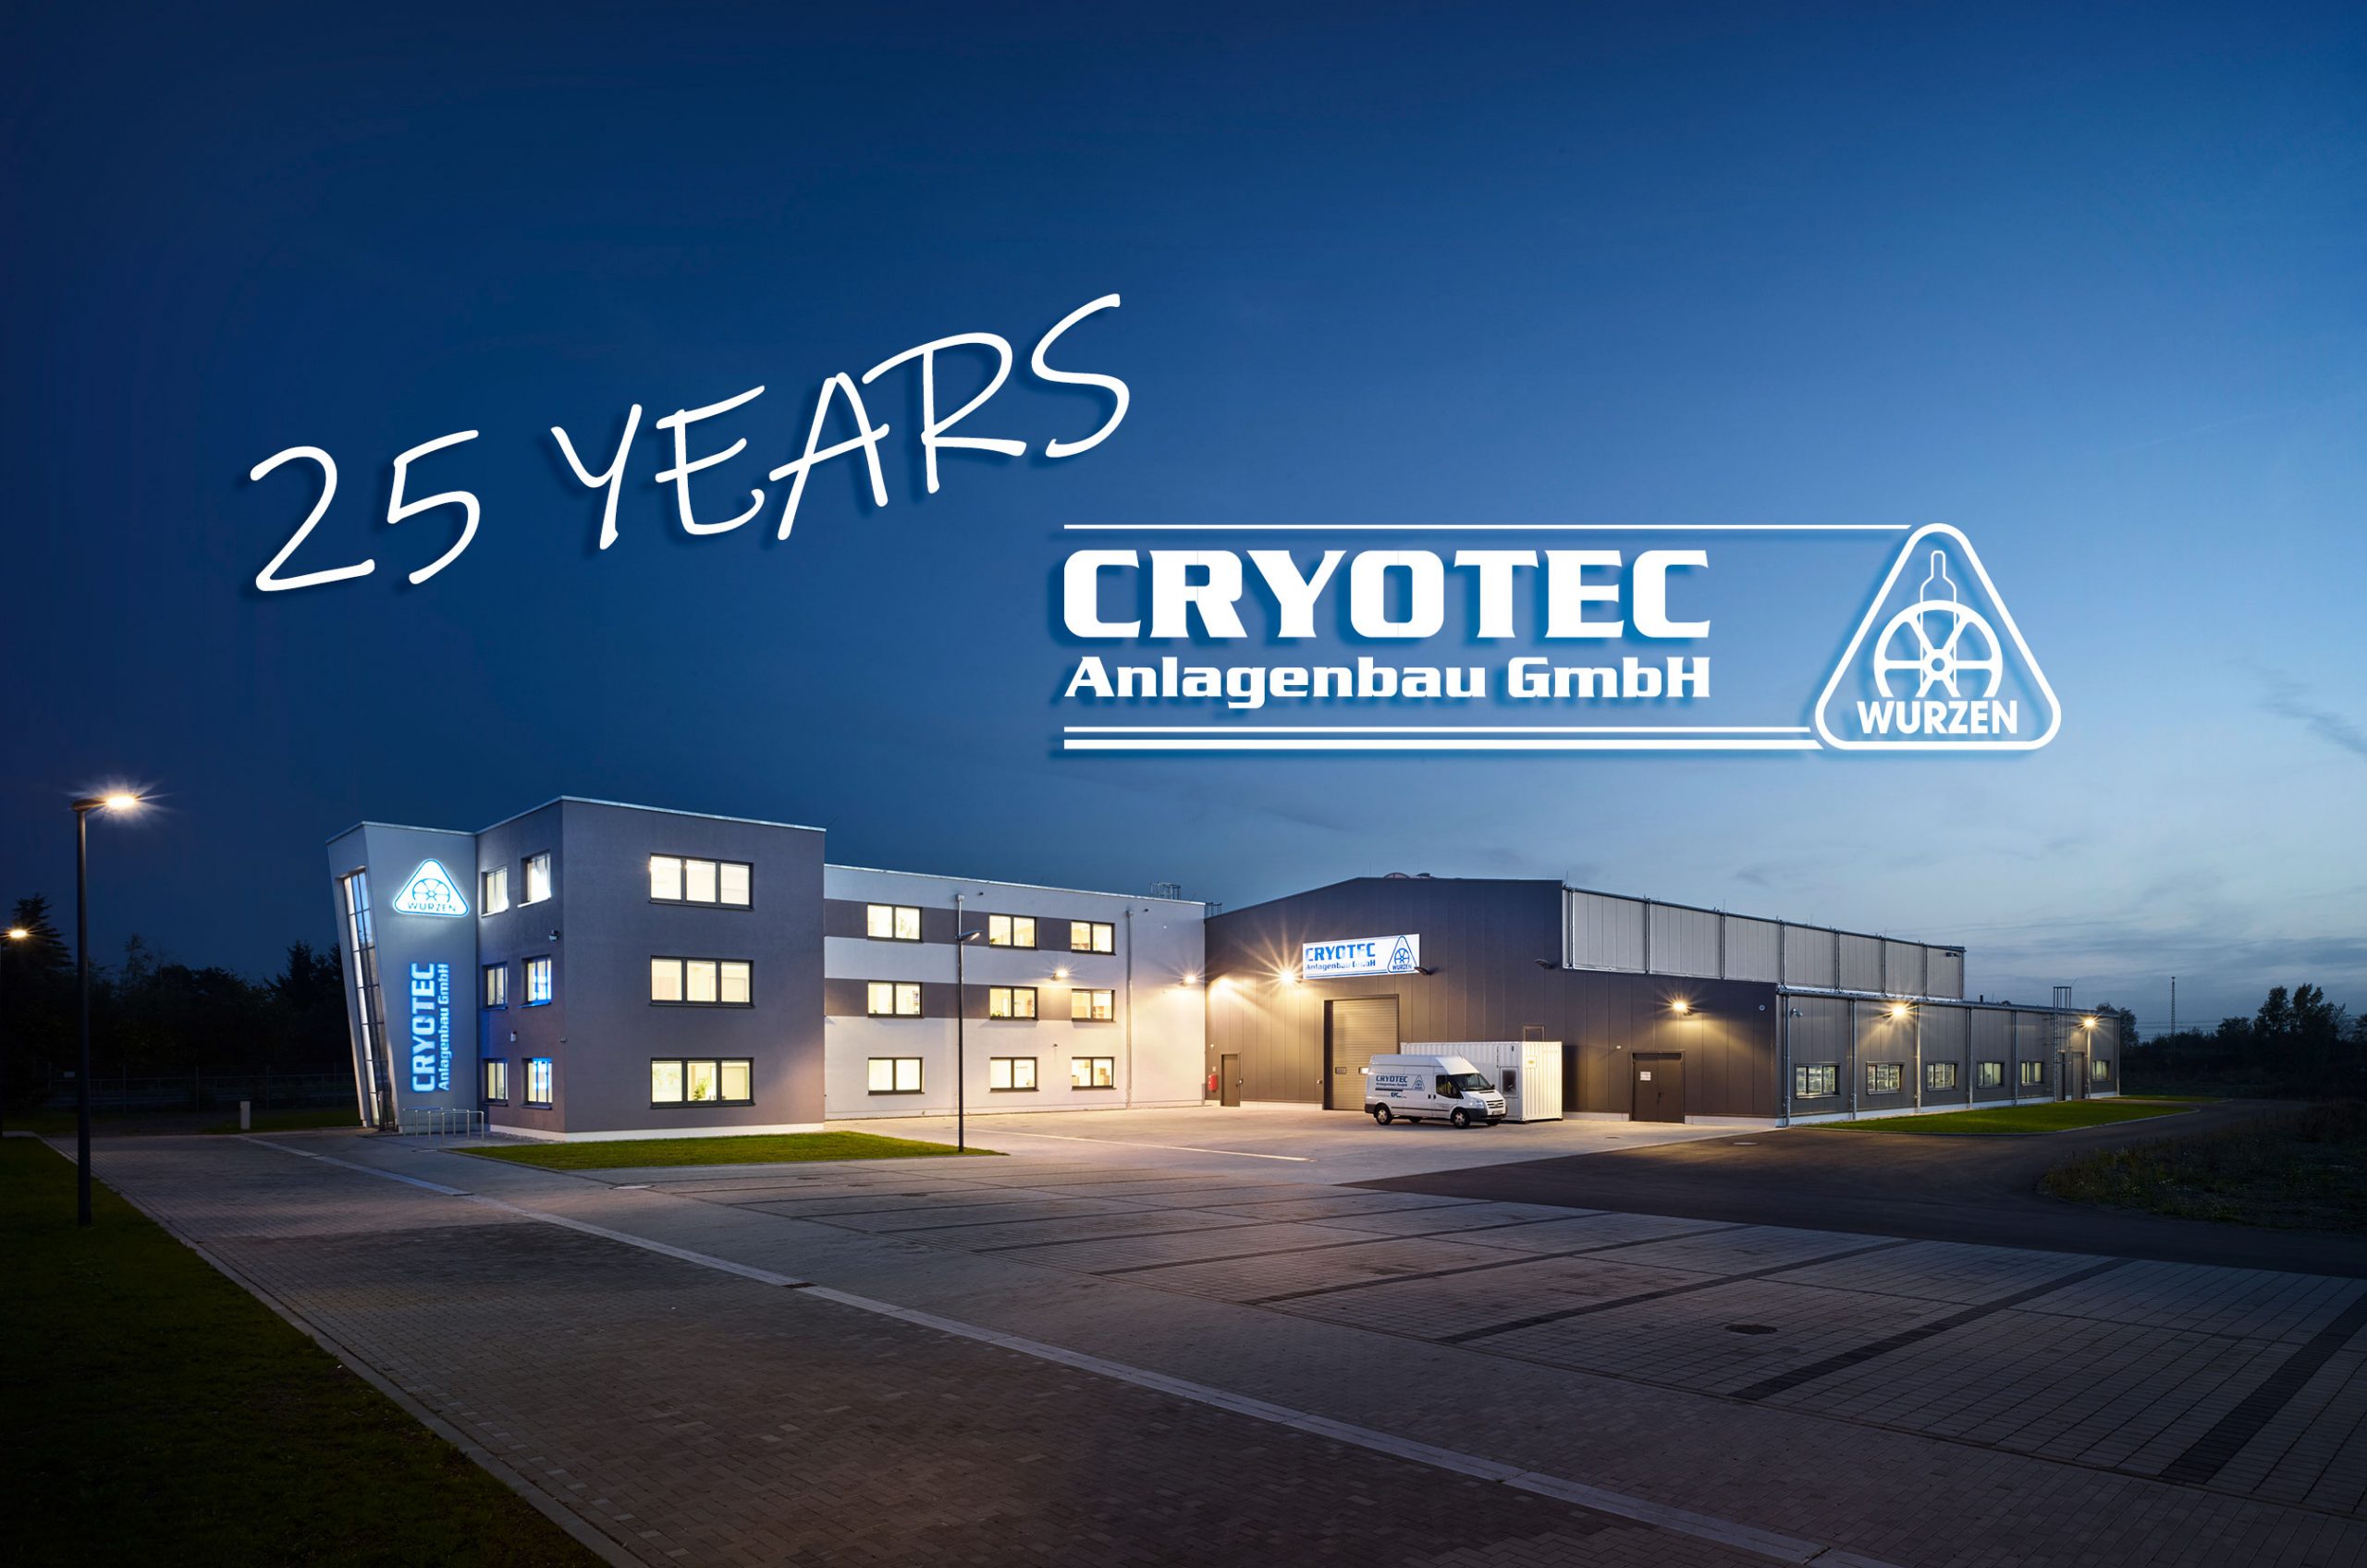 25 Years of CRYOTEC Anlagenbau